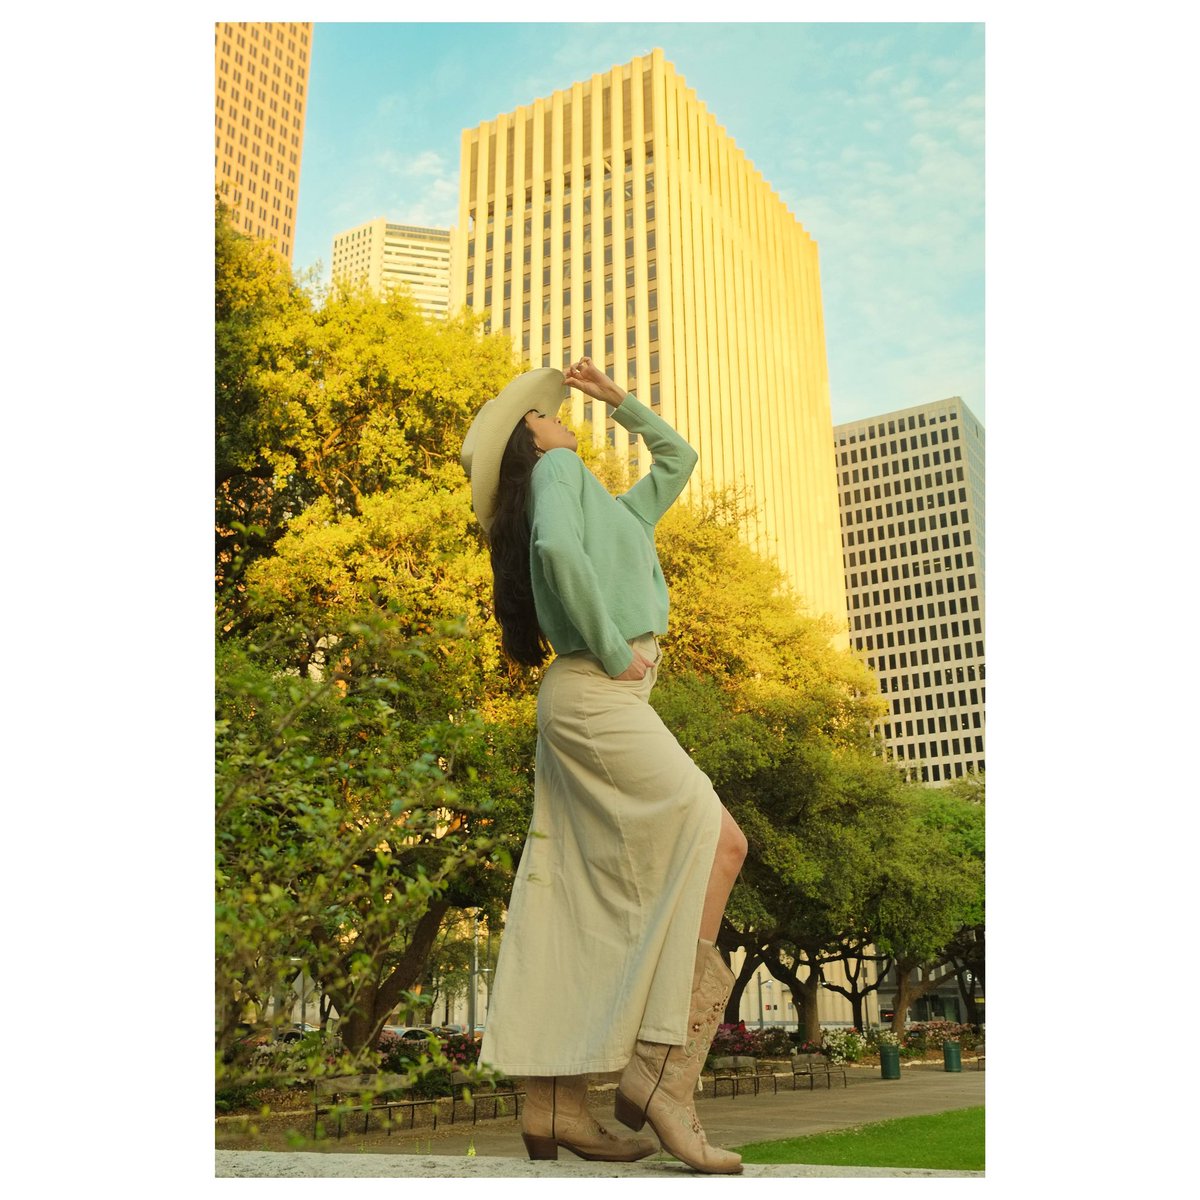 Zeni

(From the Fujifilm/Luminar photo walk)

-----------------------

#fujifilm #fujifilm_us #fujifilmxseries #fujifilmxpro1 #photography #texas #houston #portrait #model #photowalk #city #urban #color #blackandwhite